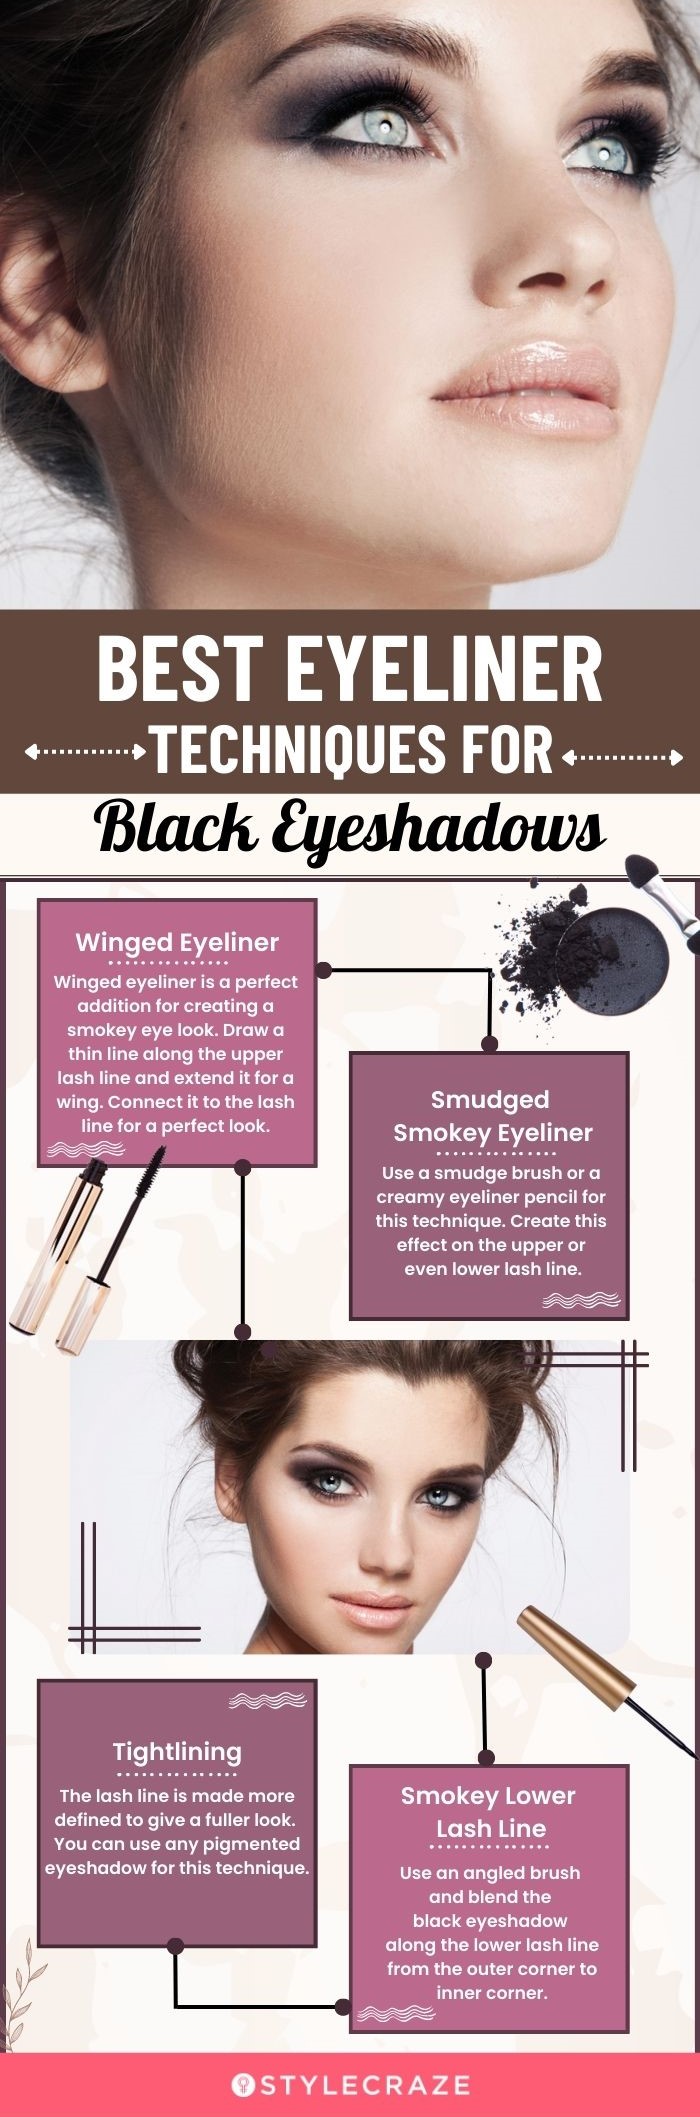 Best Eyeliner Techniques For Black Eyeshadows (infographic)